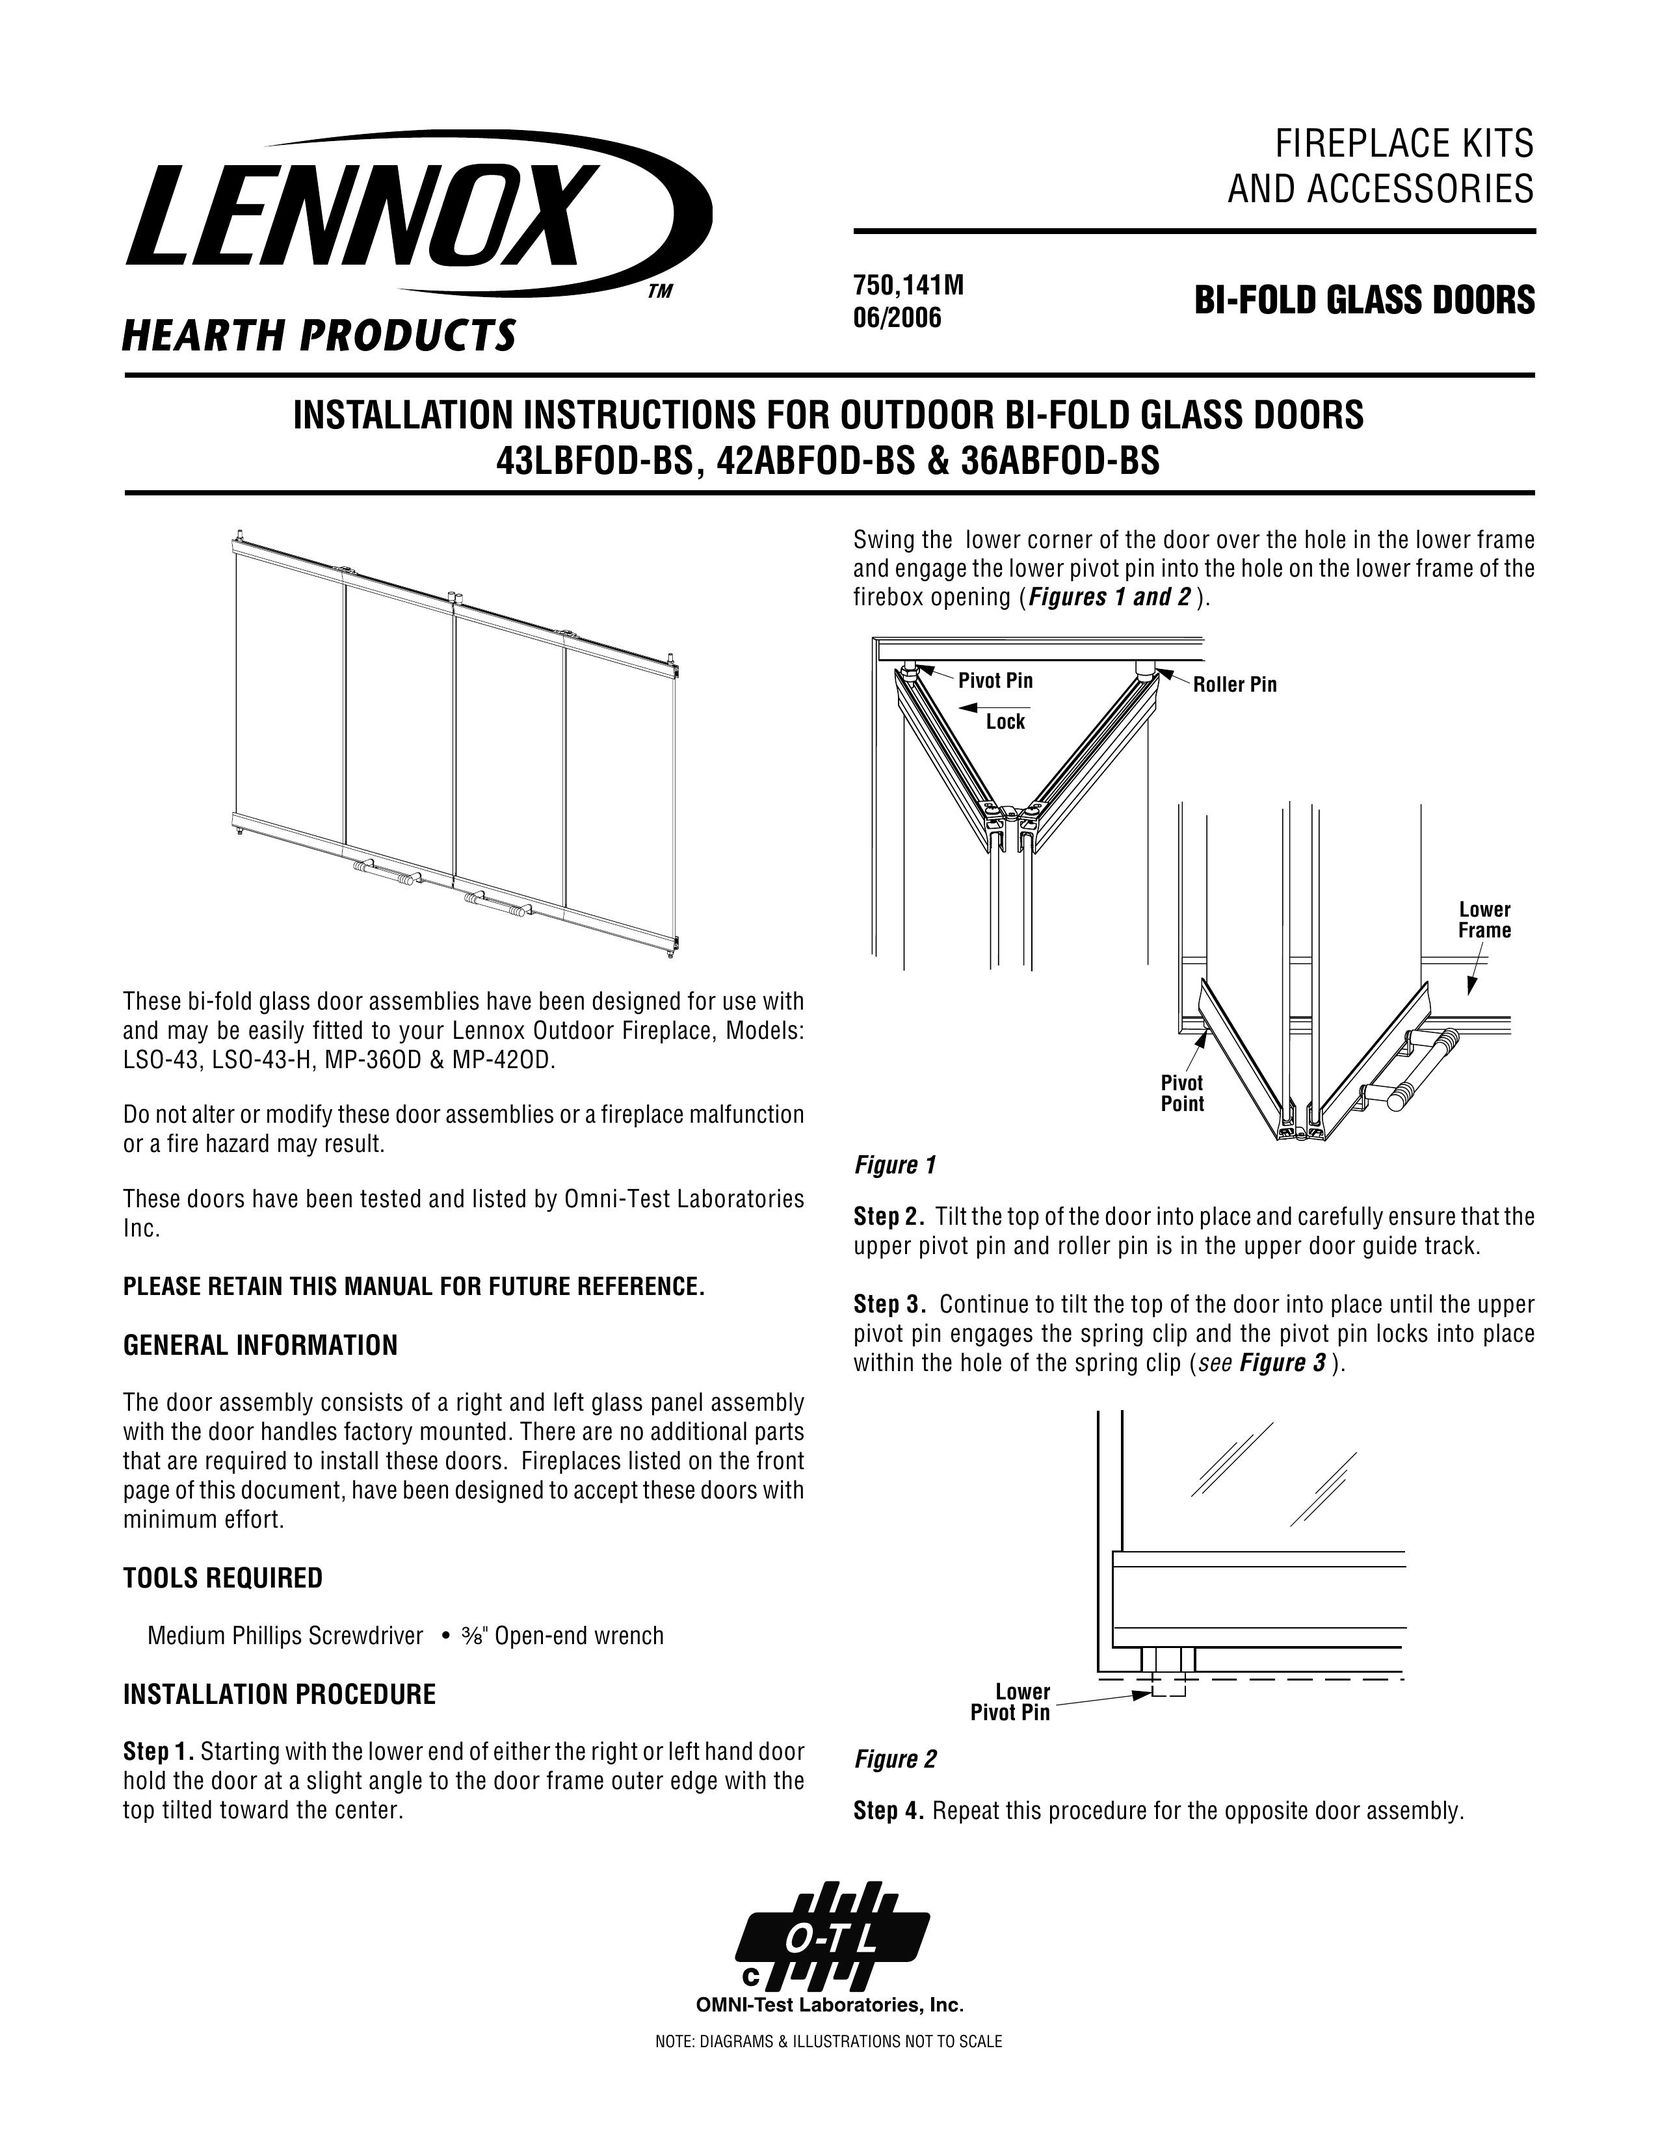 Lennox Hearth LSO-43 Door User Manual